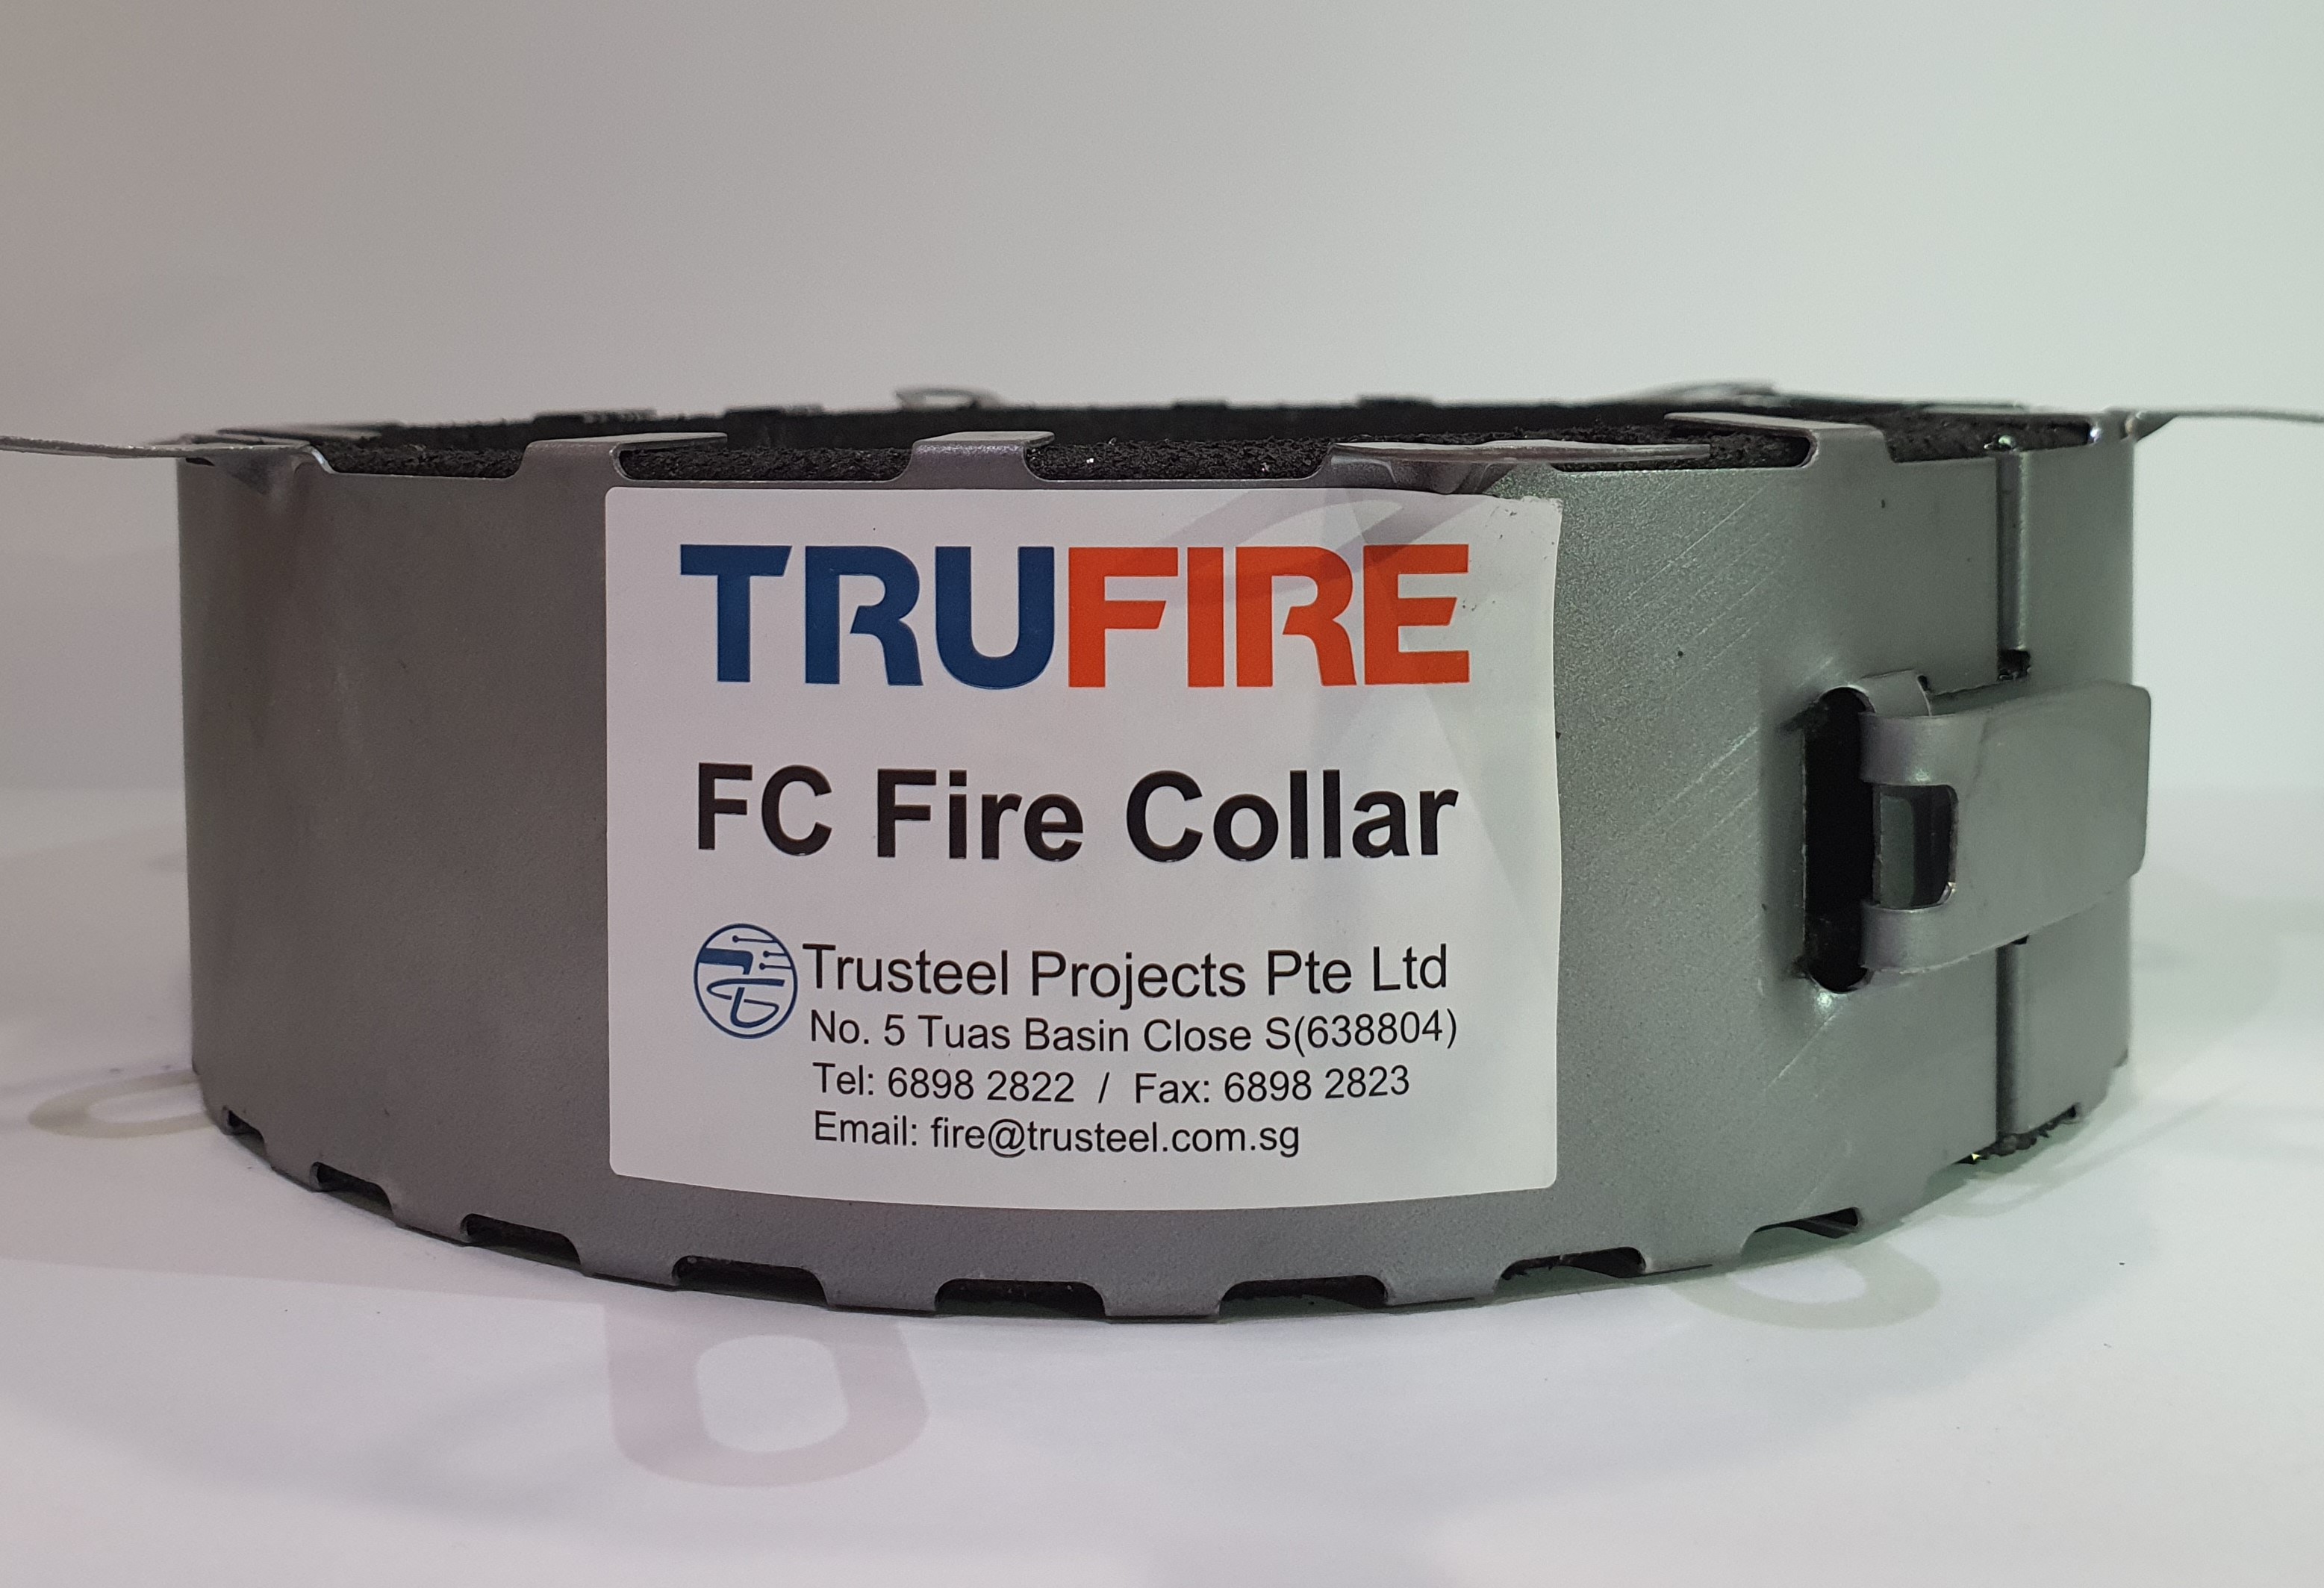 TRUFIRE FC FIRE COLLAR